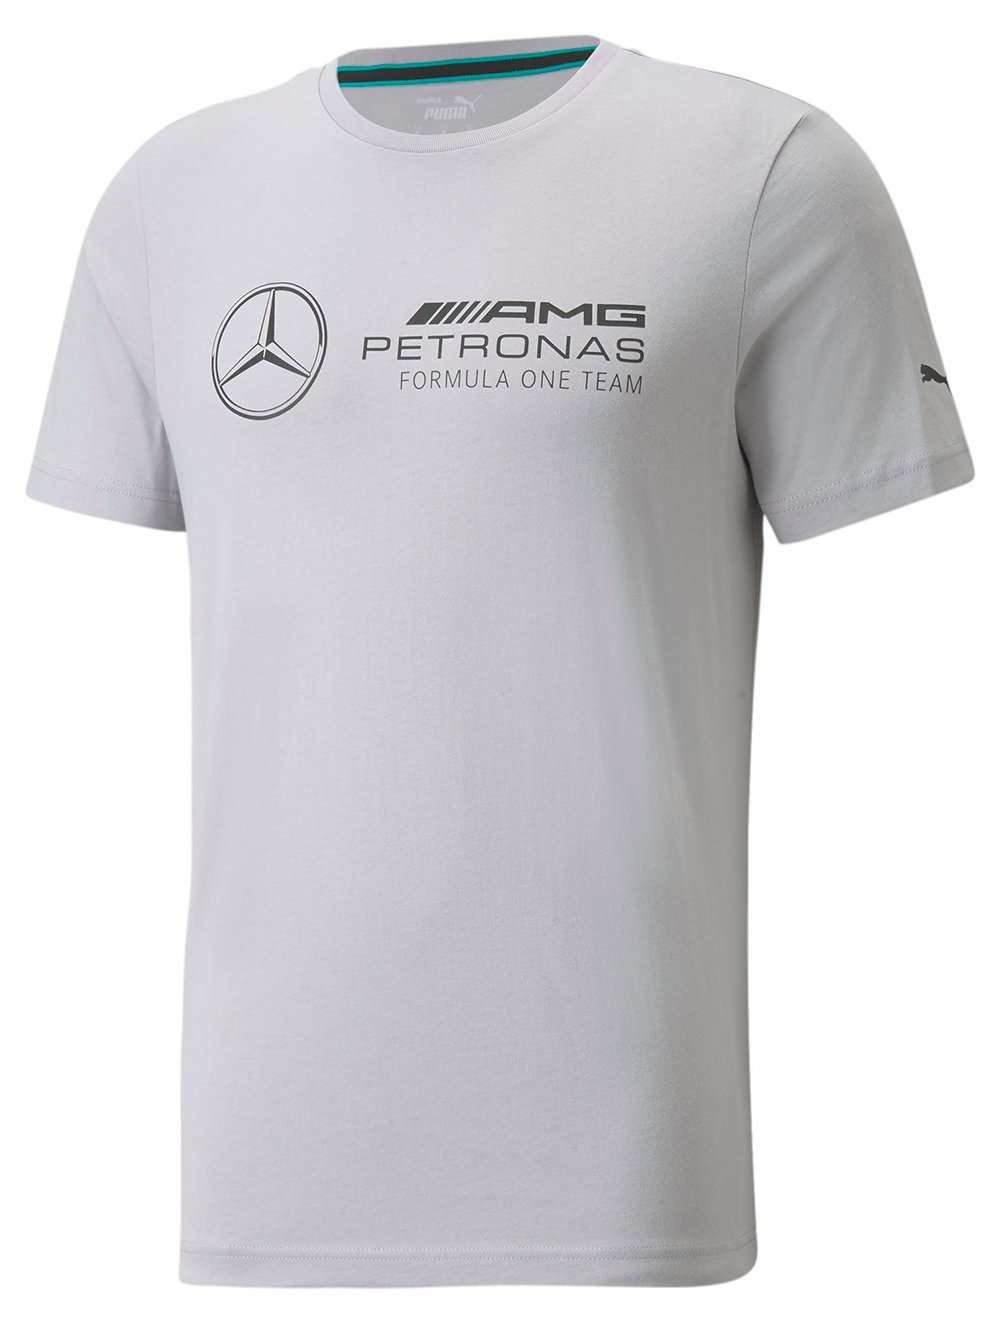 Camiseta Puma Masculina Mercedes F1 Logo Silver Cinza